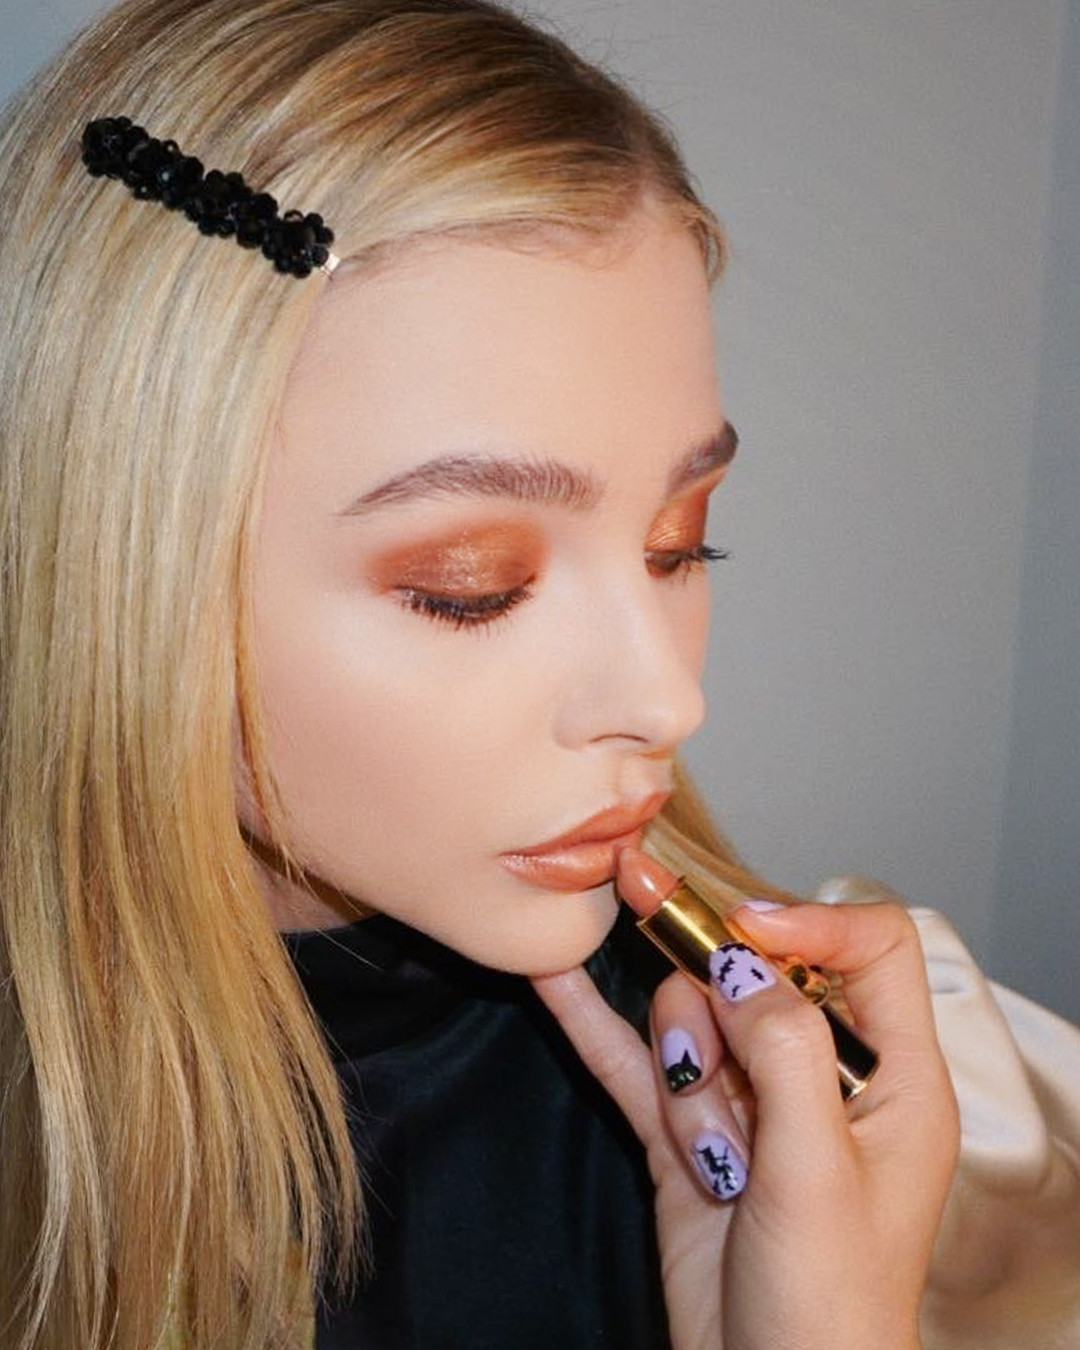 Chloe Grace Moretz's Ethereal Makeup Look Tops Our Best Beauty List